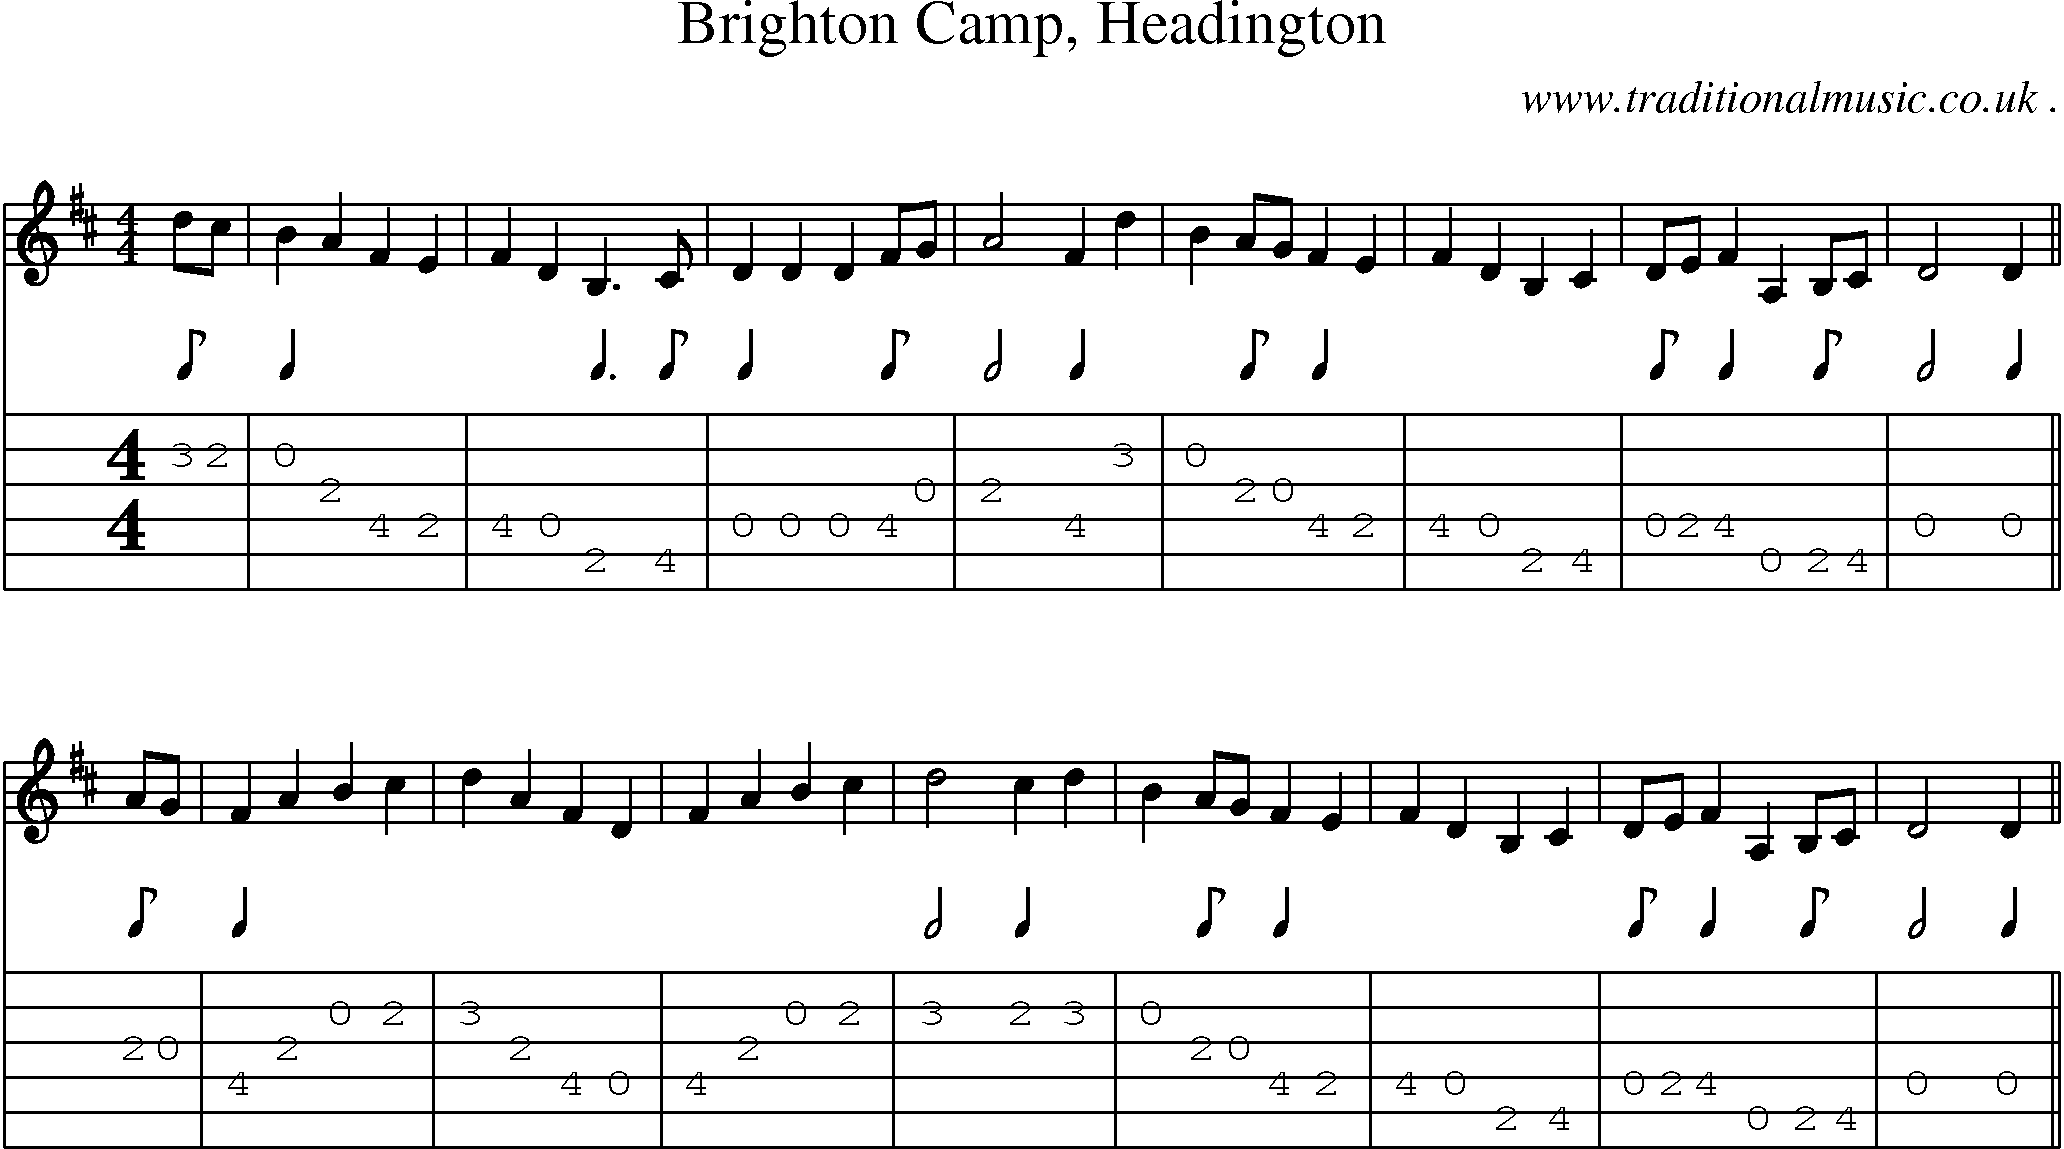 Sheet-Music and Guitar Tabs for Brighton Camp Headington